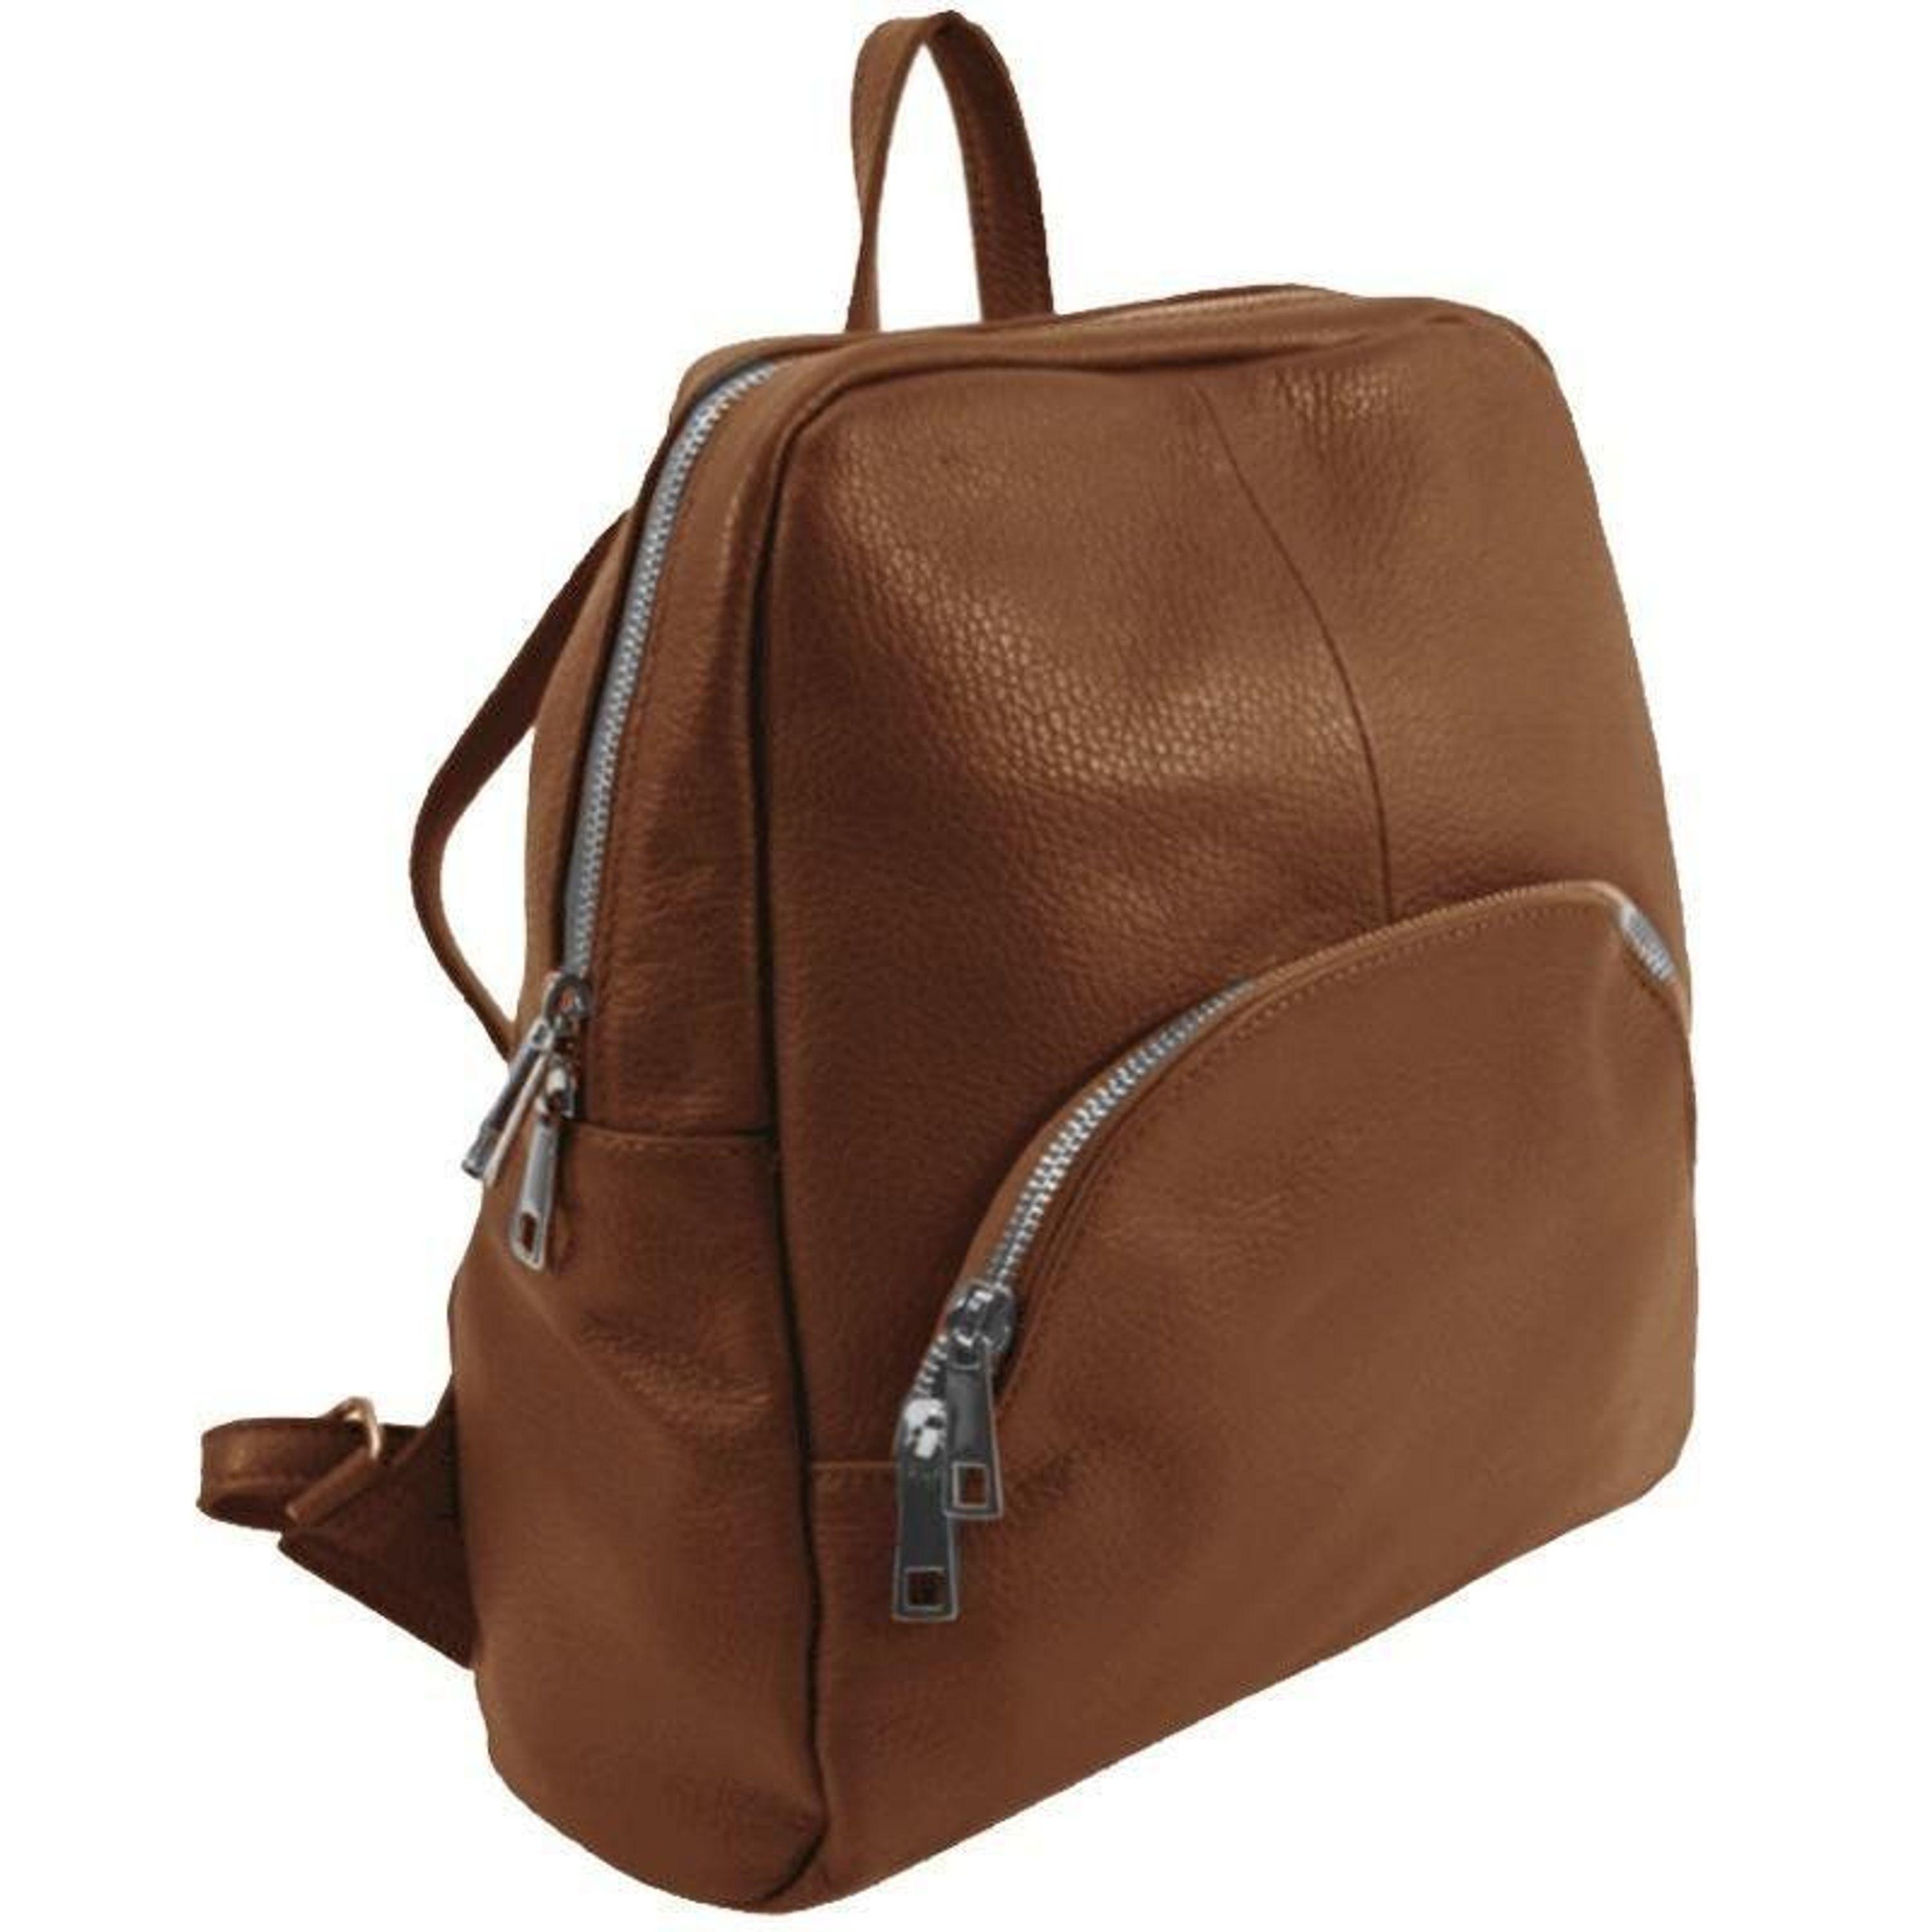 Marrakech Voyager - Genuine Leather Backpack in Camel